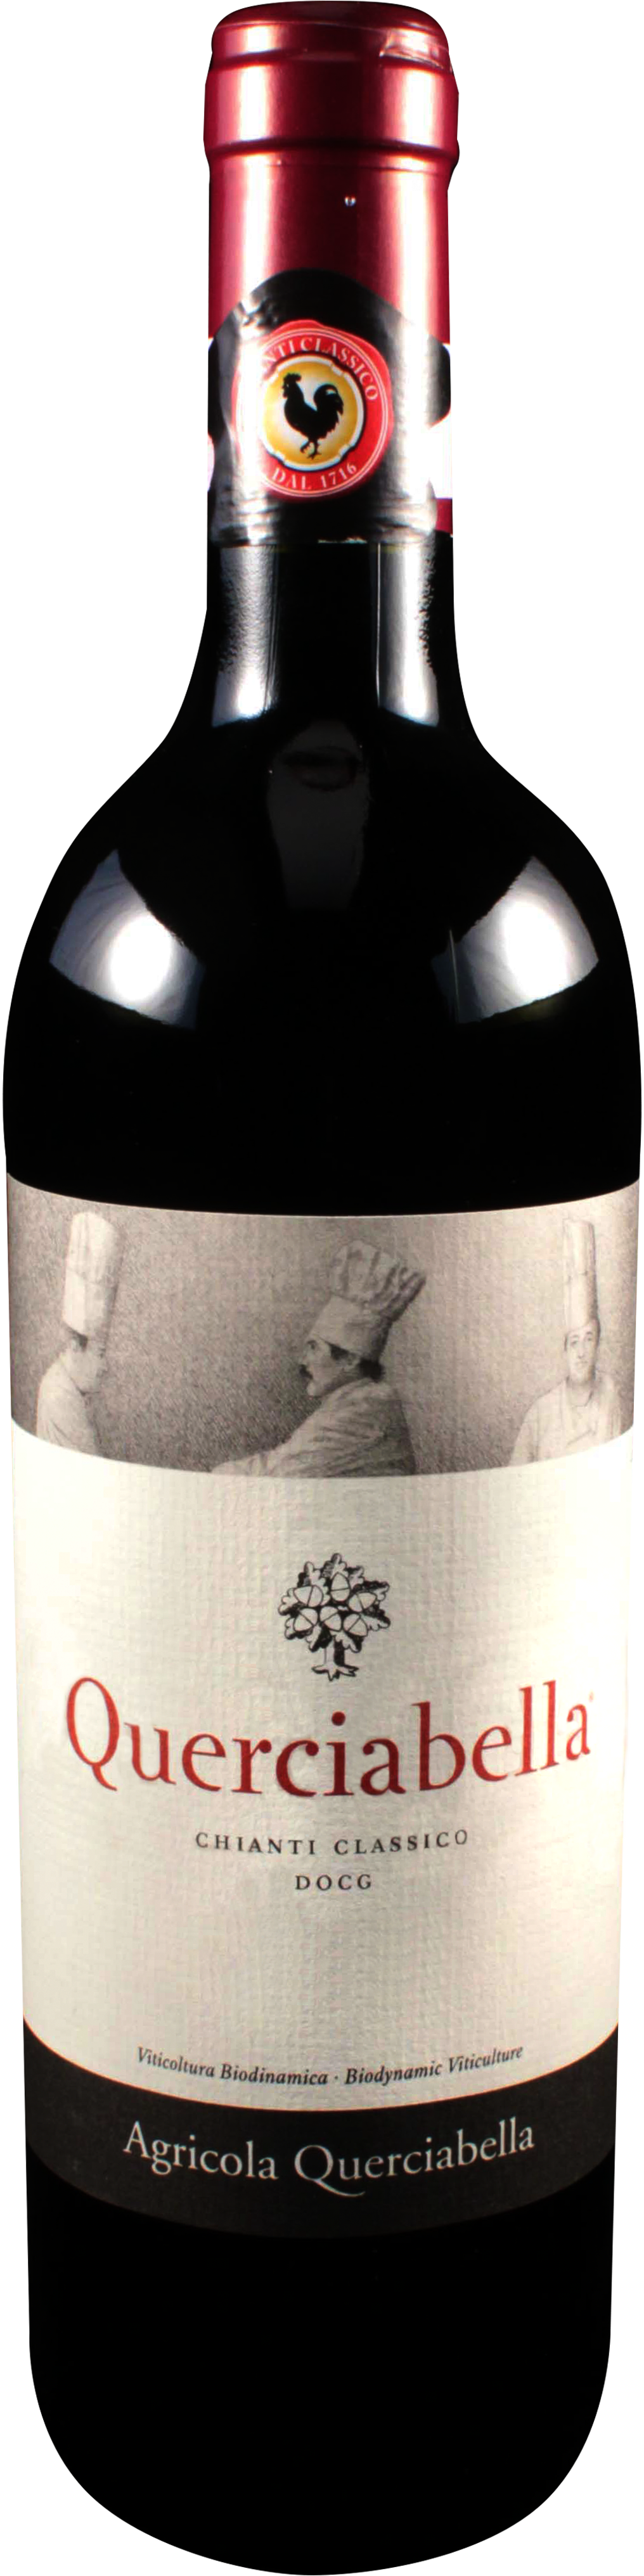 Bottle shot of 2009 Chianti Classico